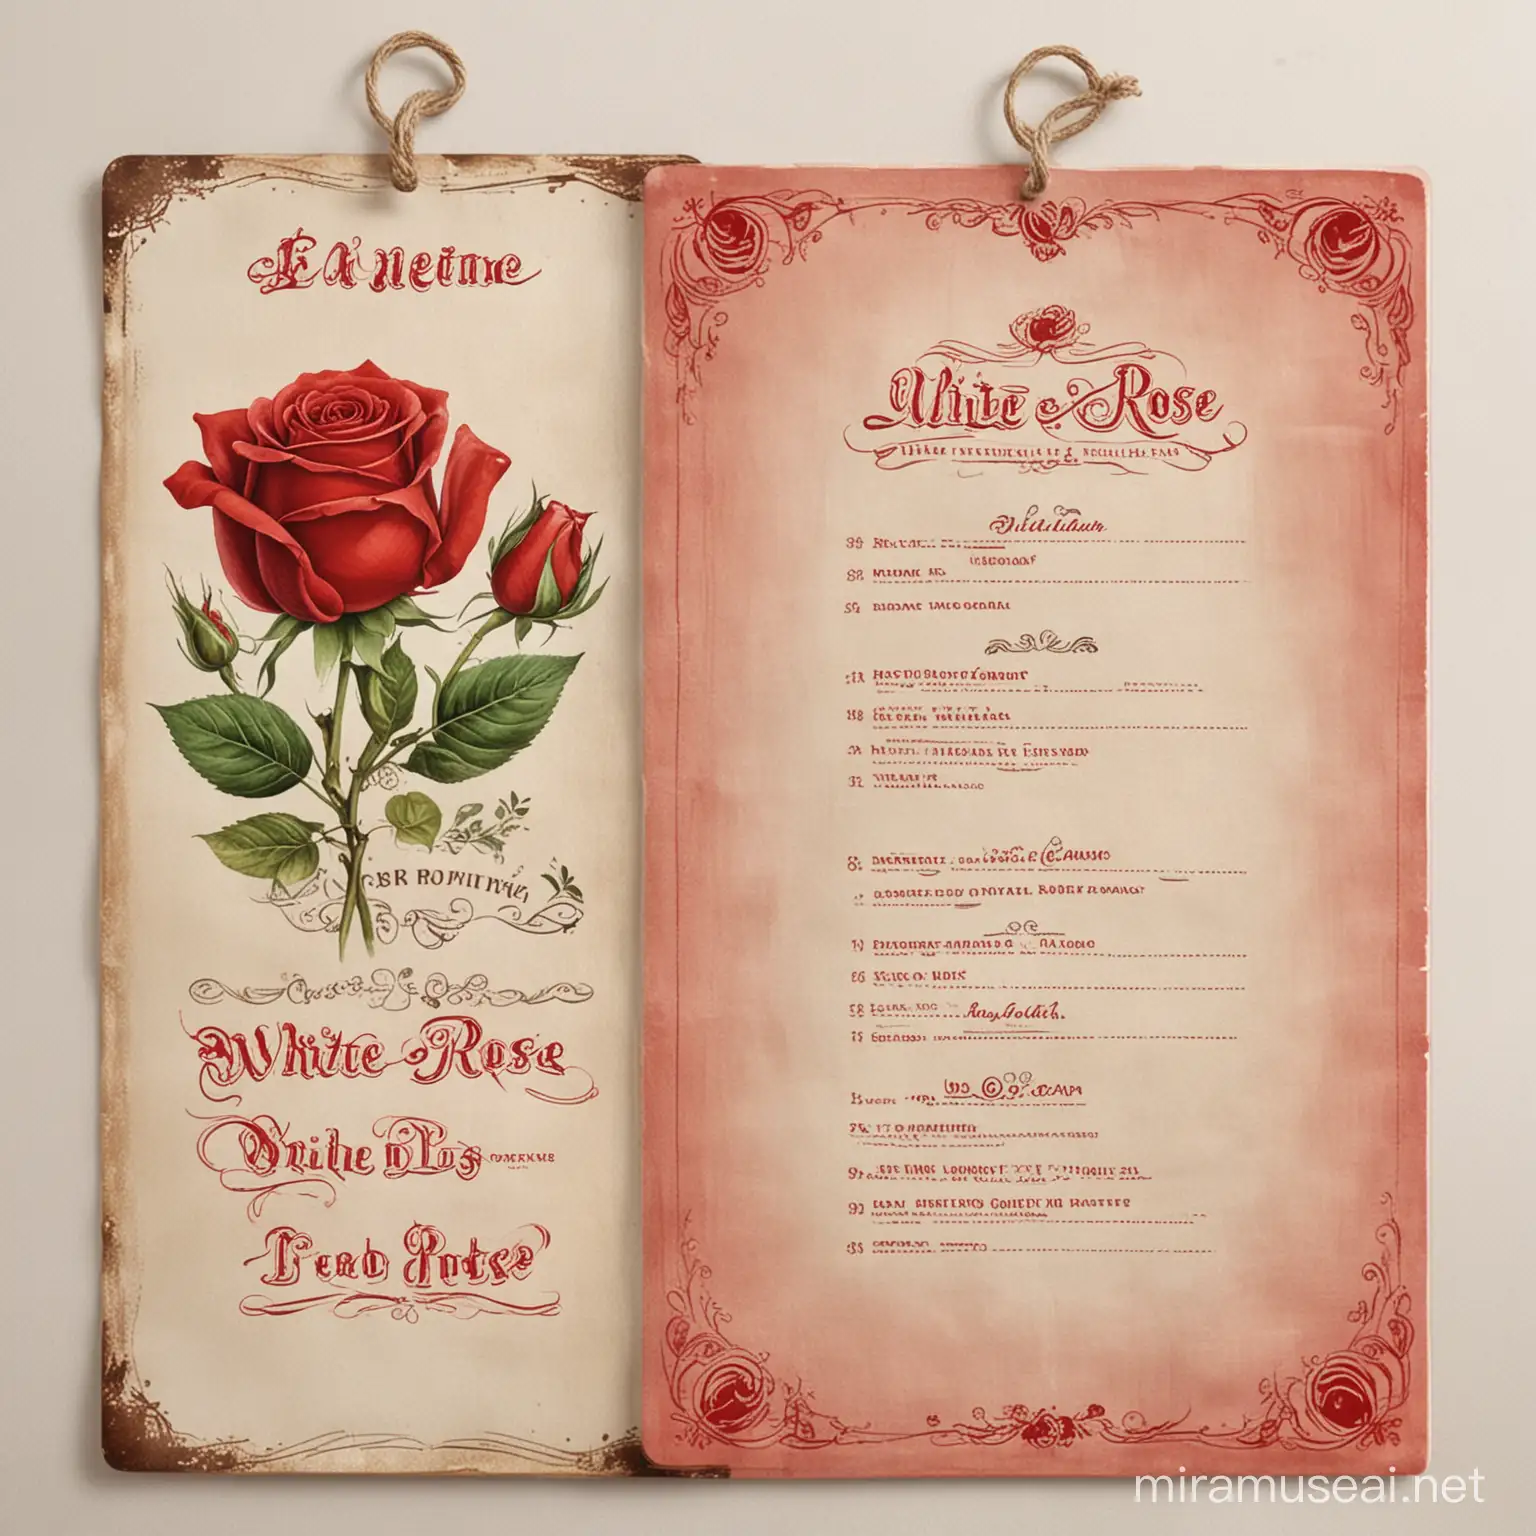 Напиши меню для европейского романтического ресторана, "White&Red rose"